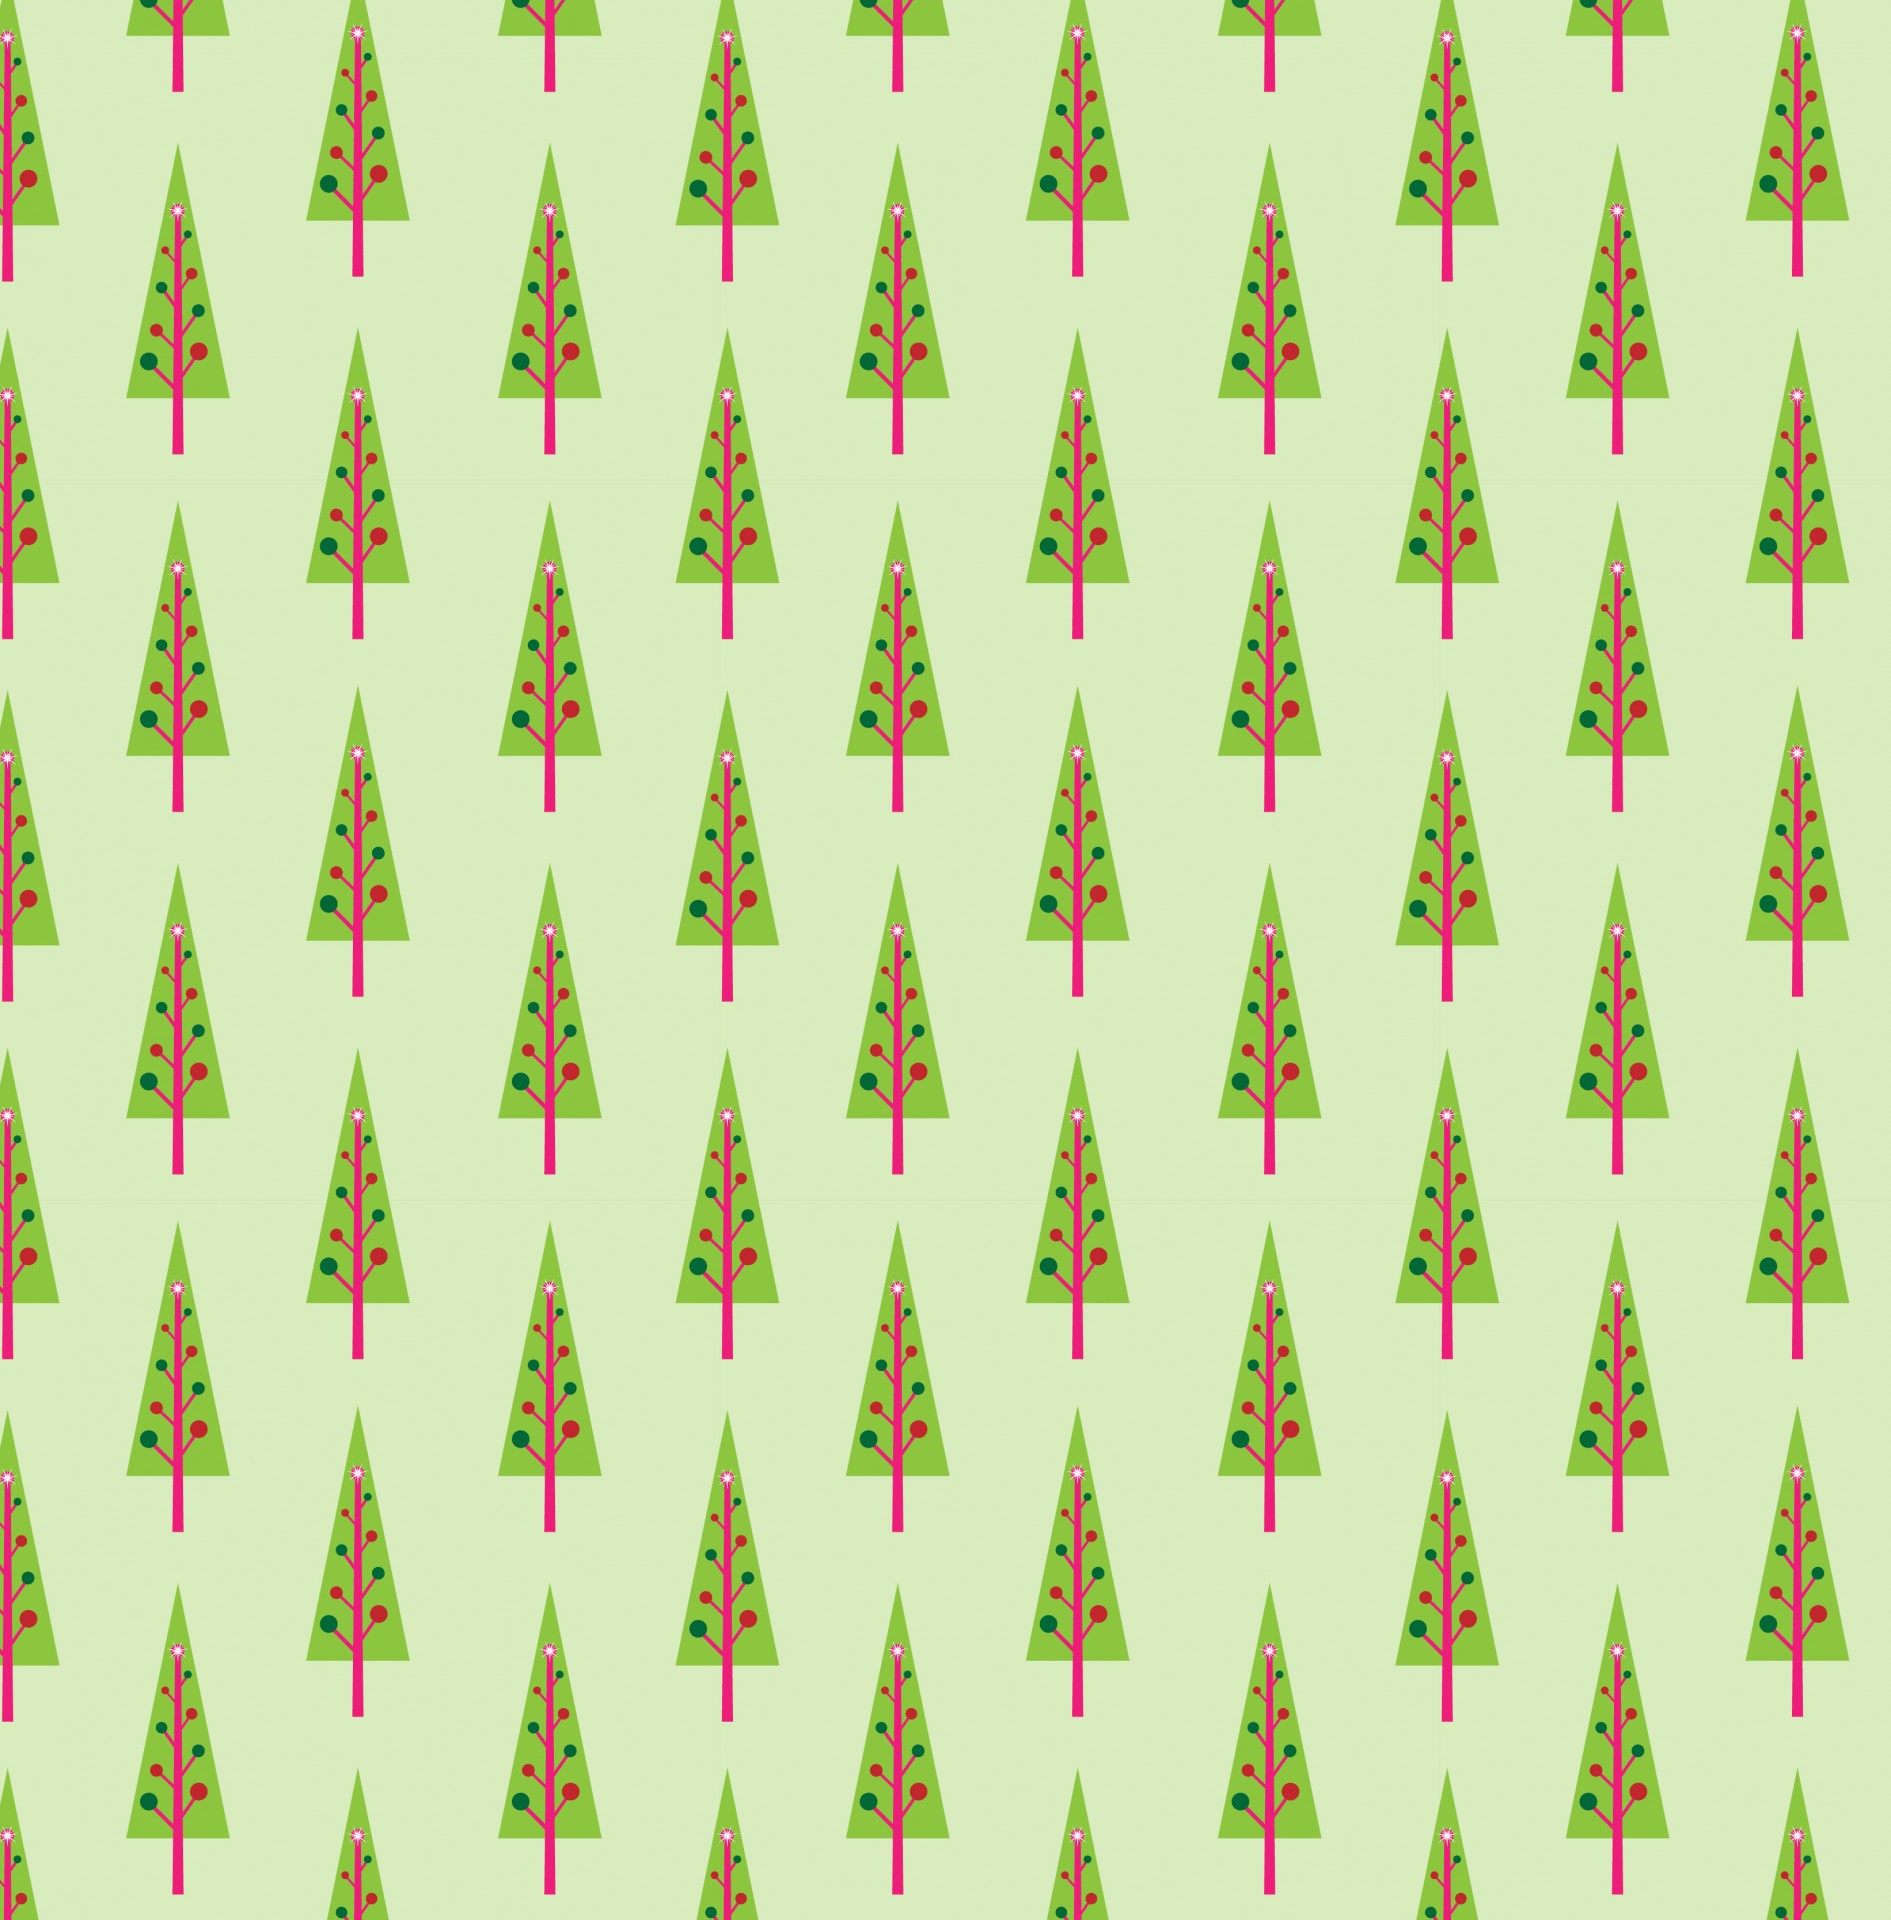 Christmas Tree Background Wallpaper